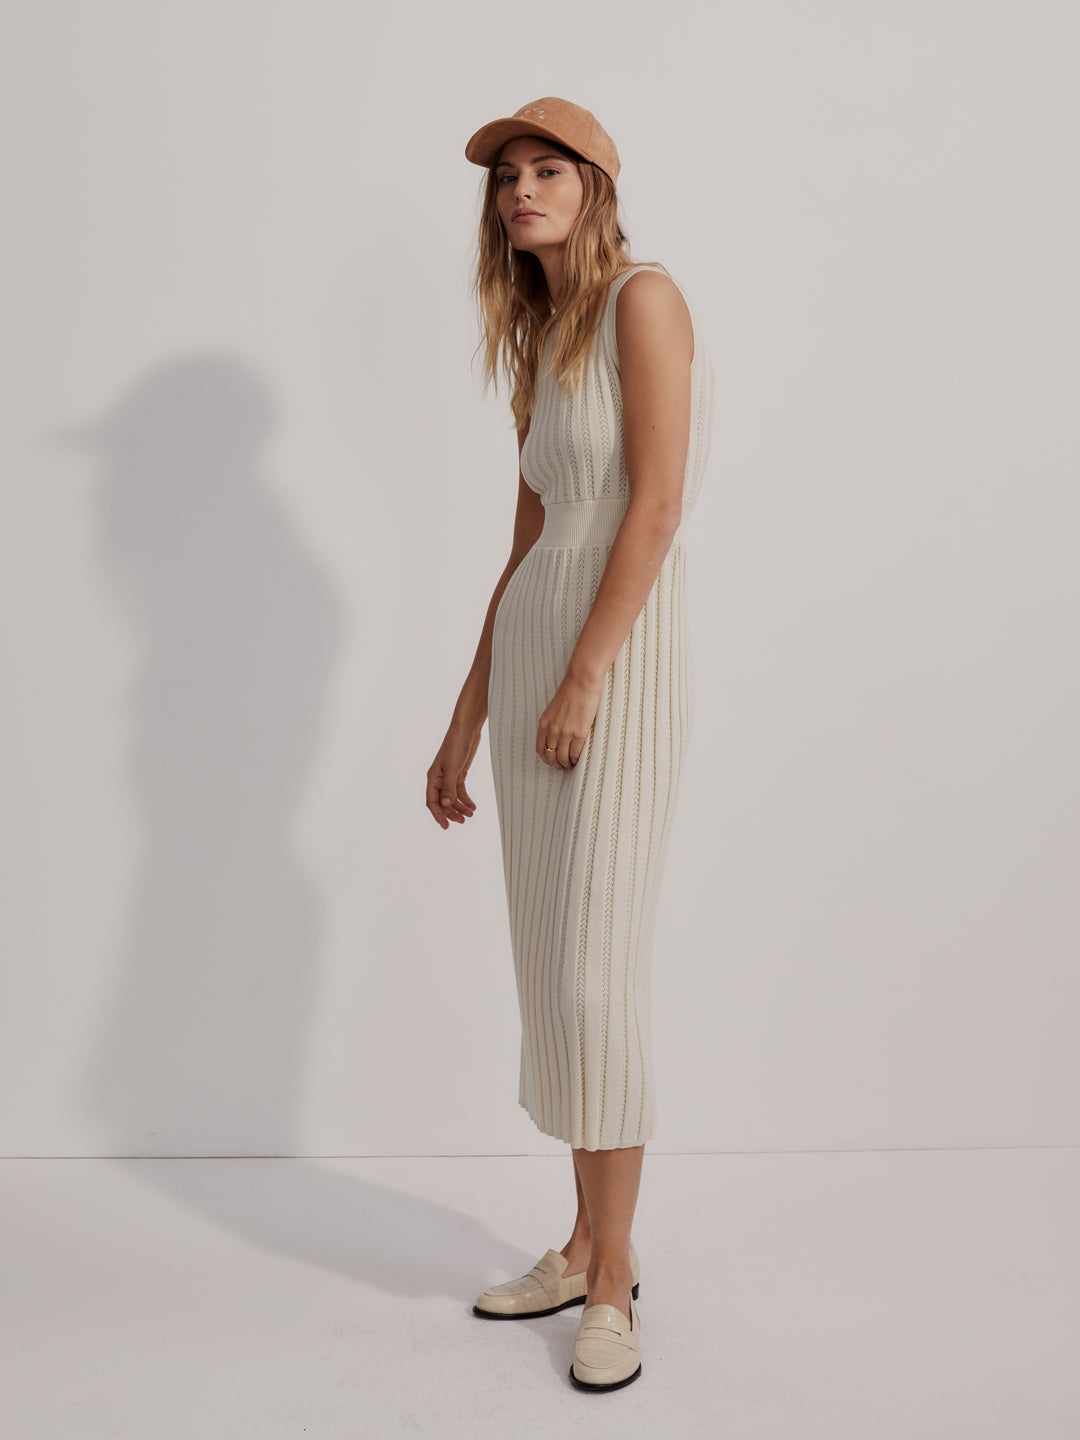 VARLEY | Florian Knit Dress